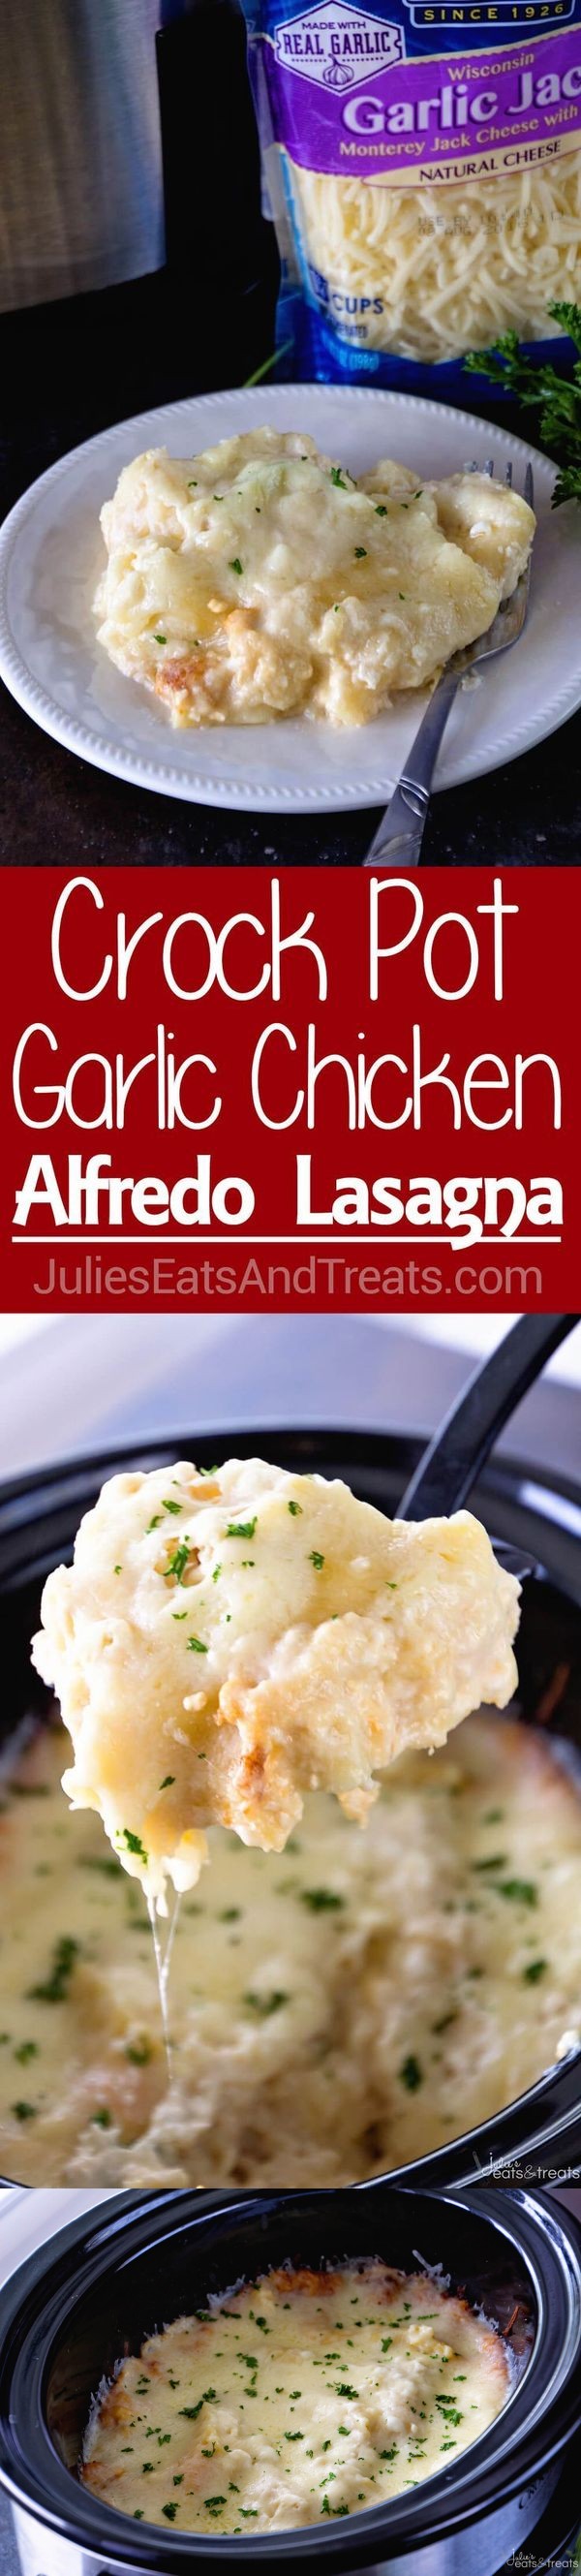 Crock Pot Garlic Chicken Alfredo Lasagna